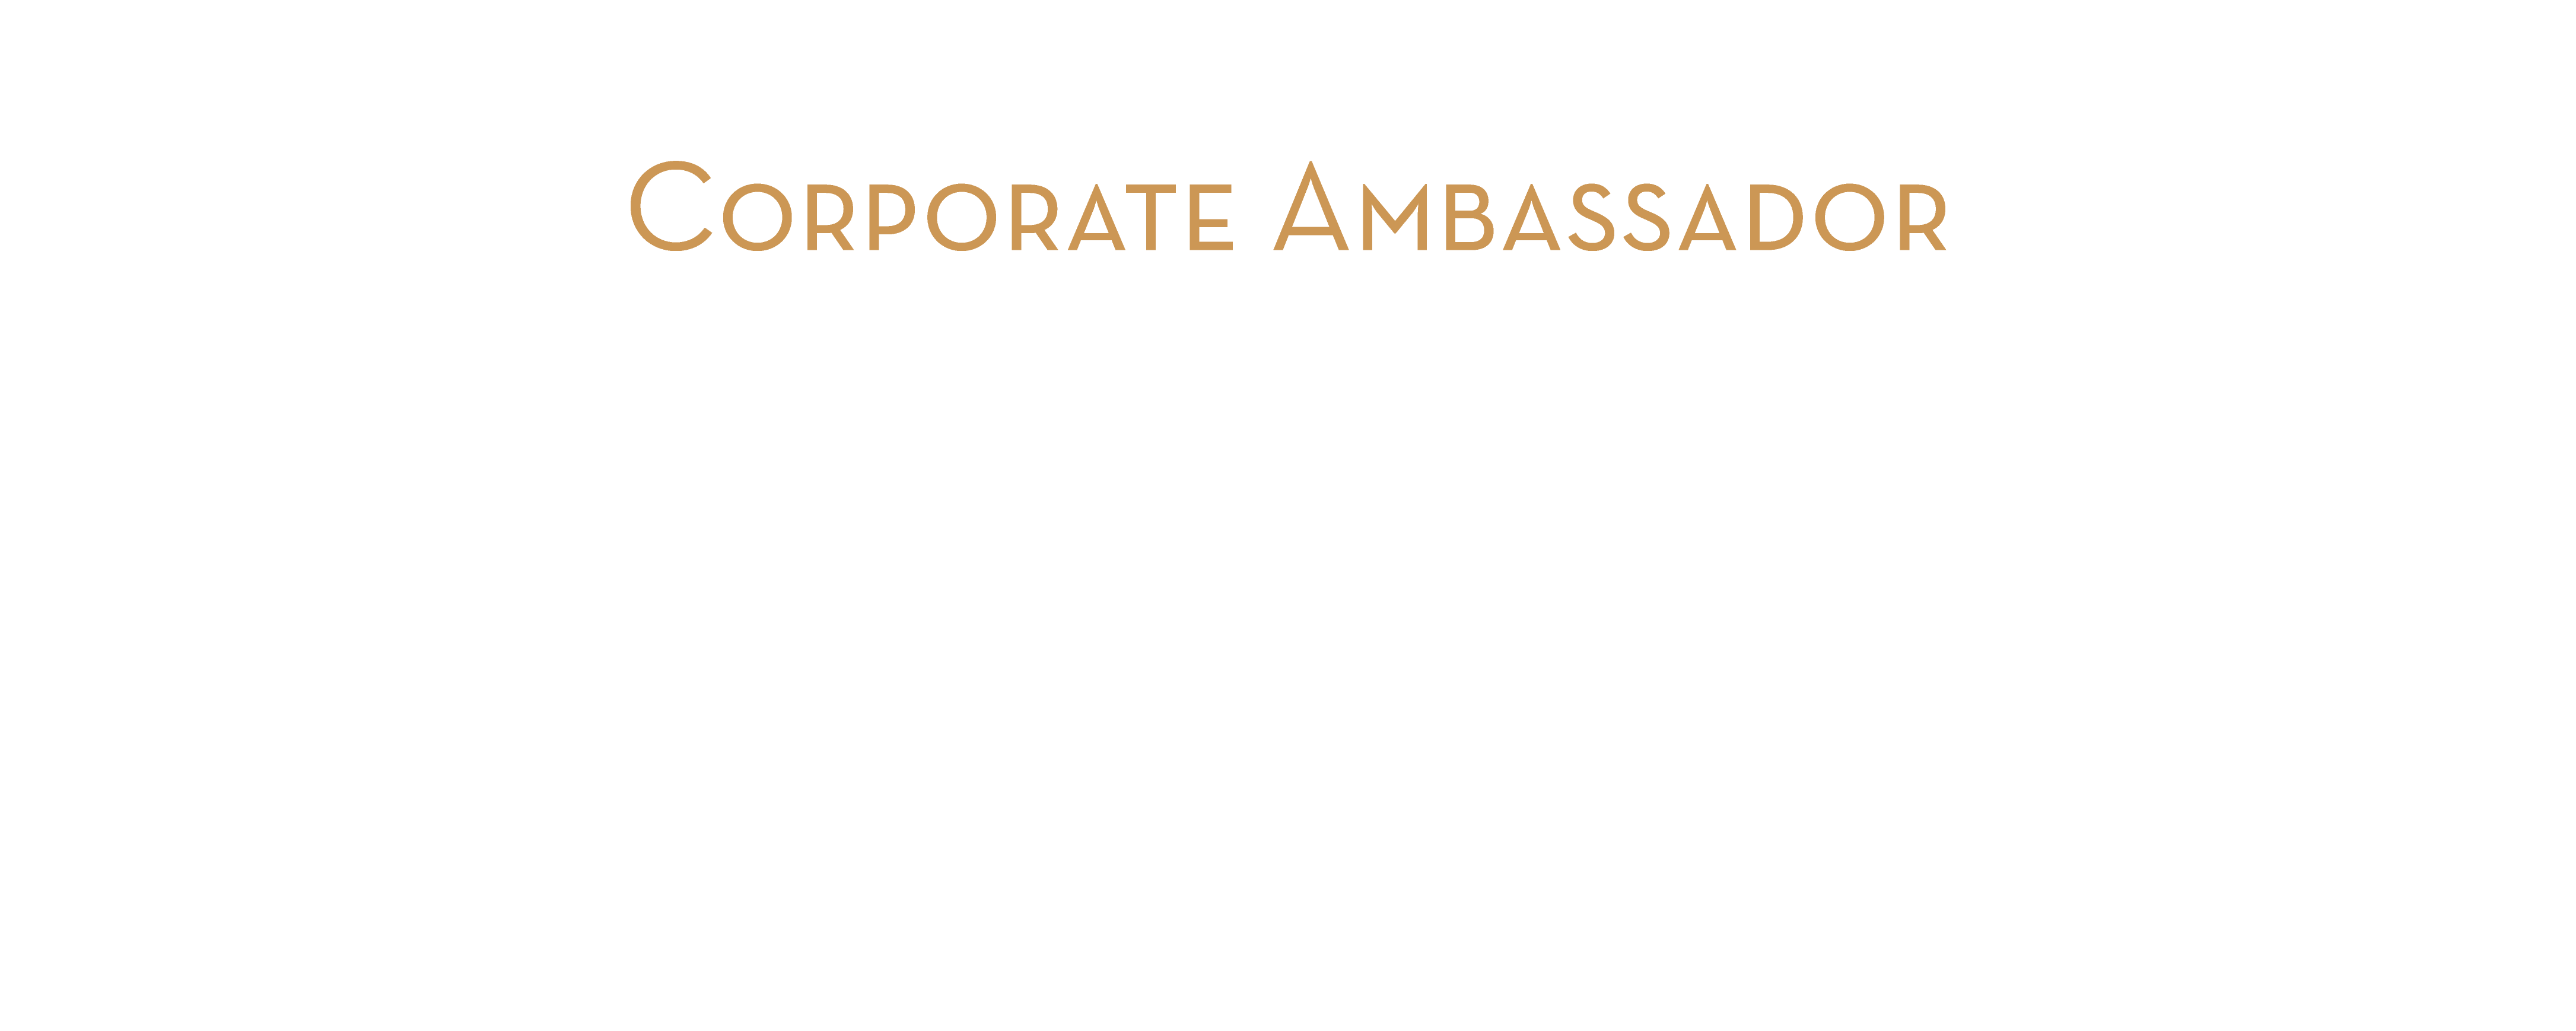 Corporate Ambassador, United Airlines